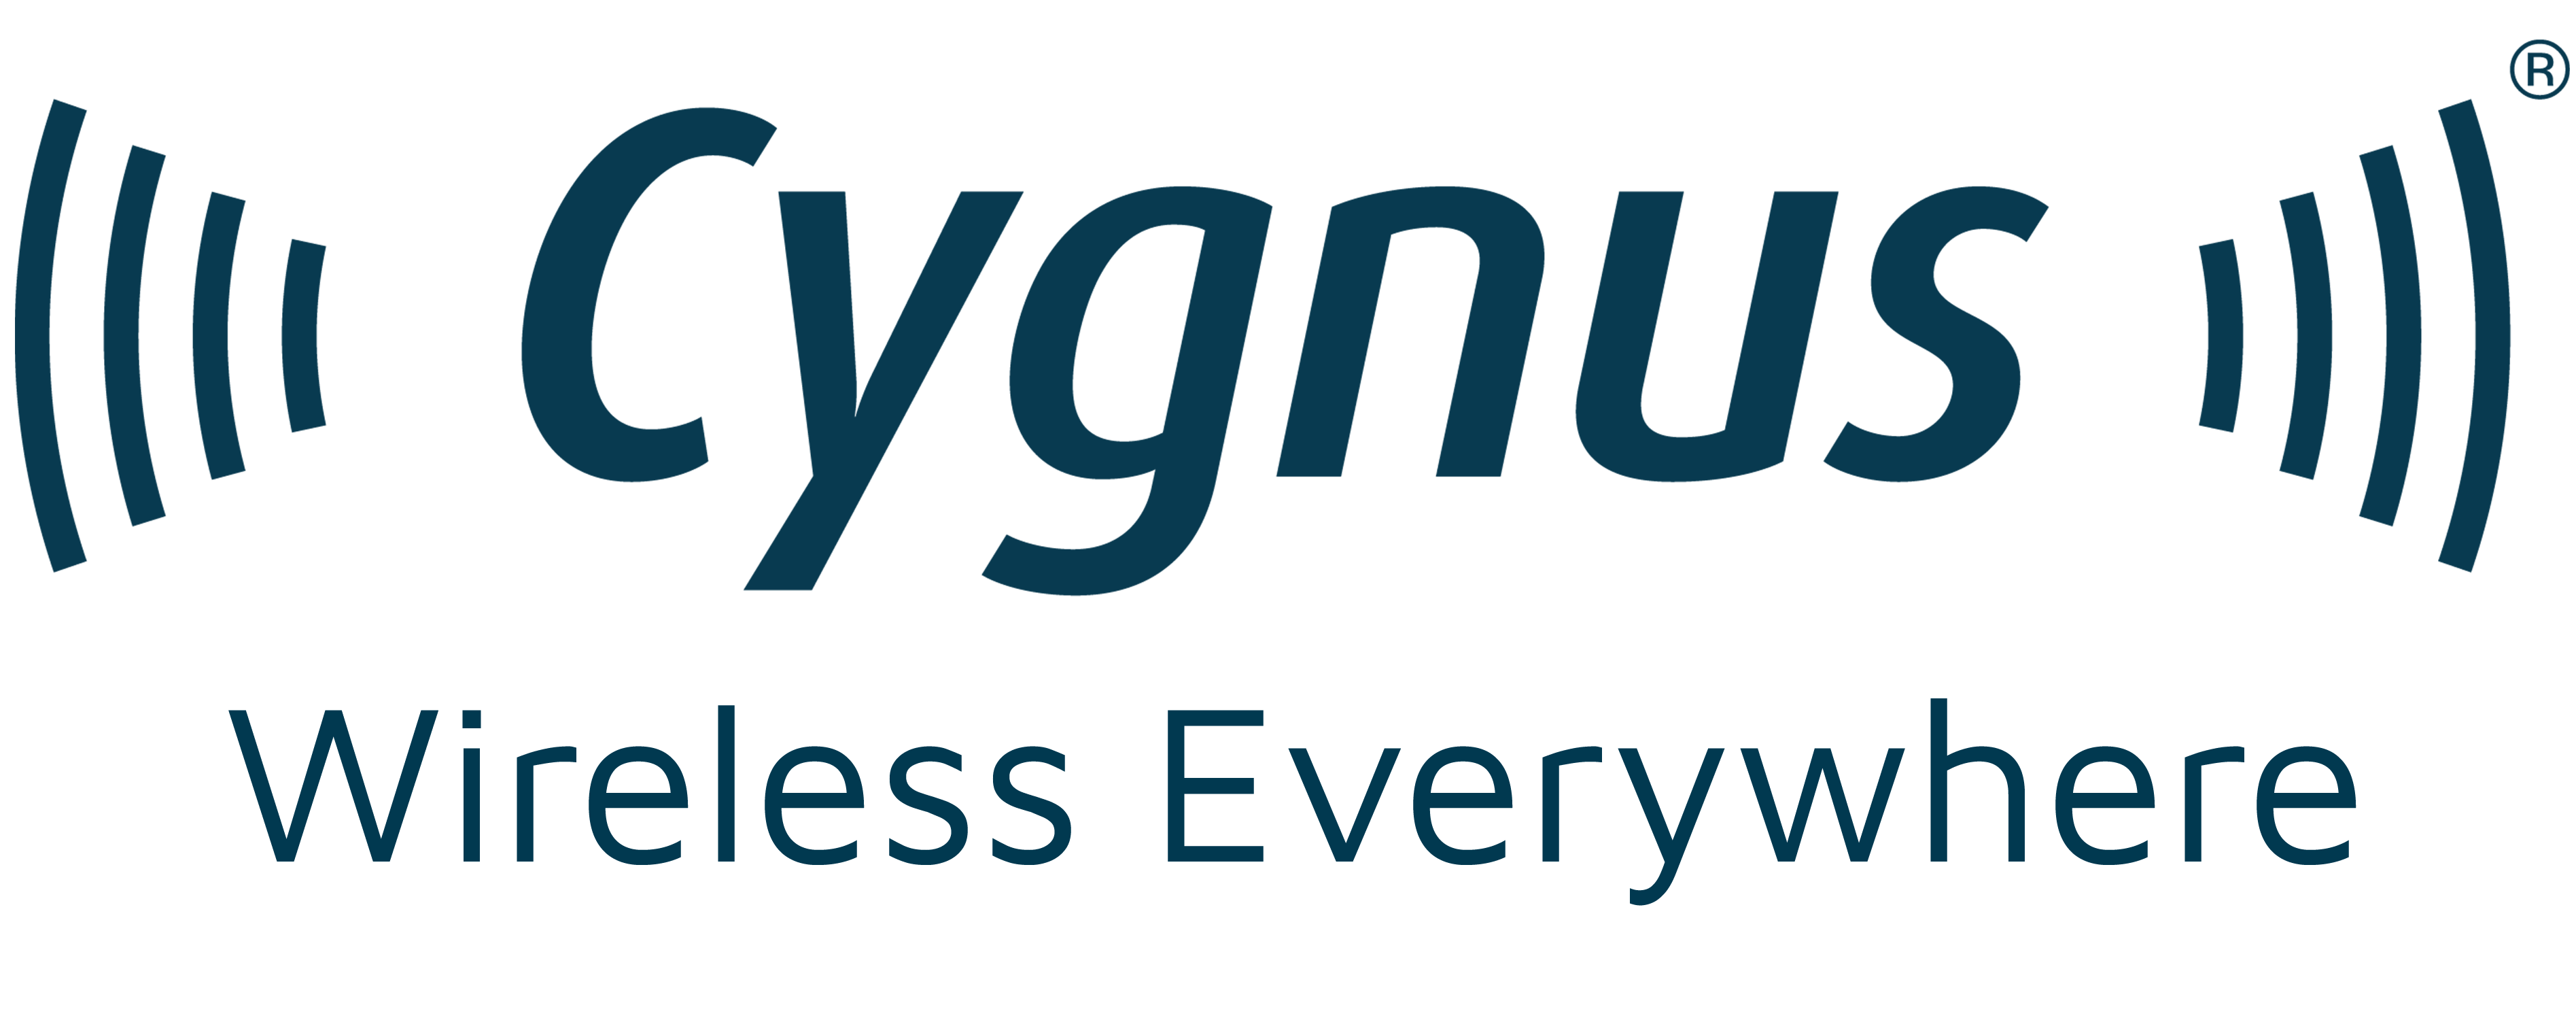 Cygnus Wireless Everywhere logo